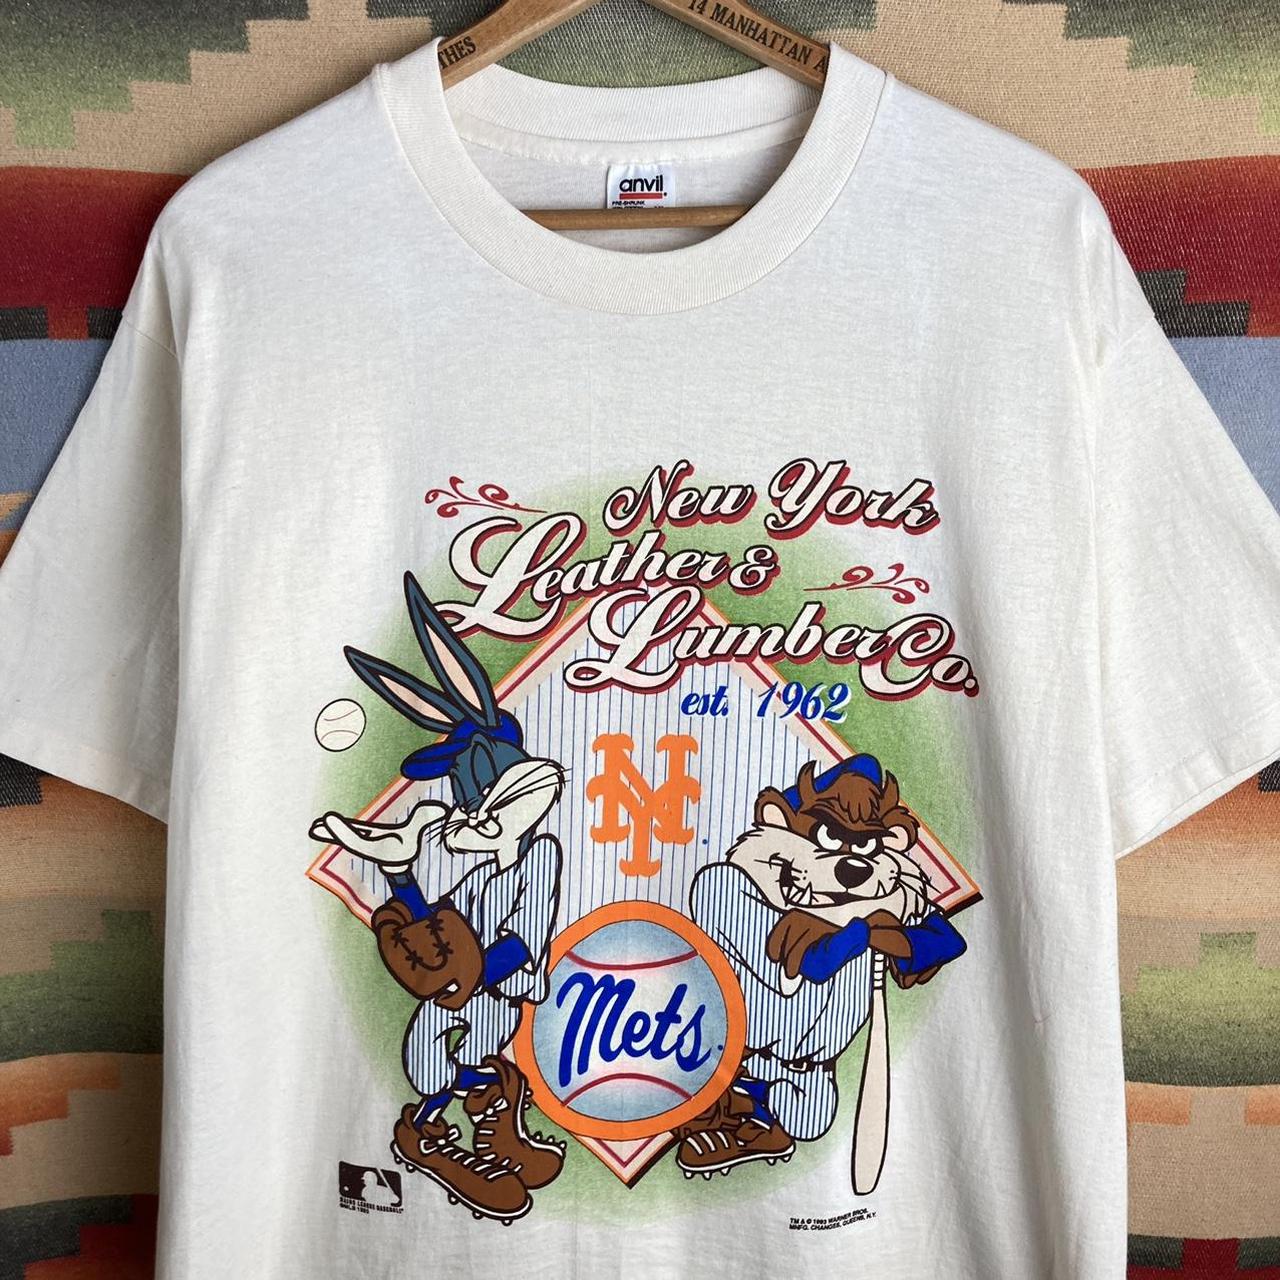 Anvil New York Yankees T-Shirts for Men